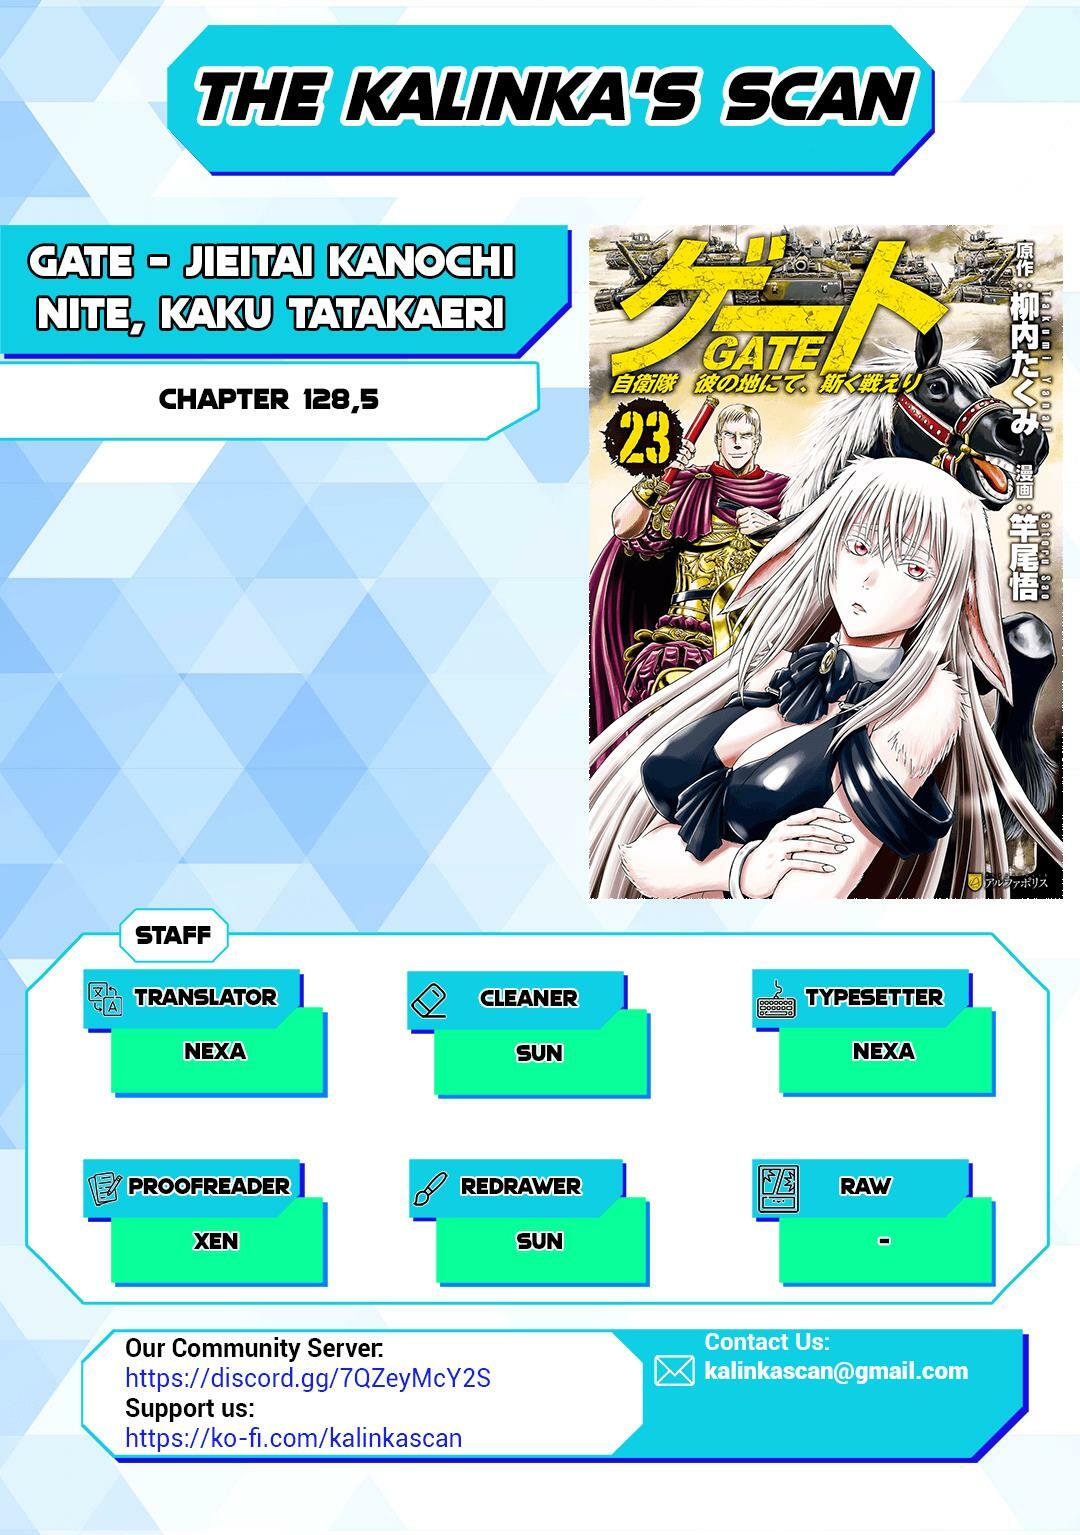 DISC] GATE - Jieitai Kanochi nite, Kaku Tatakaeri Ch. 128.5 : r/manga